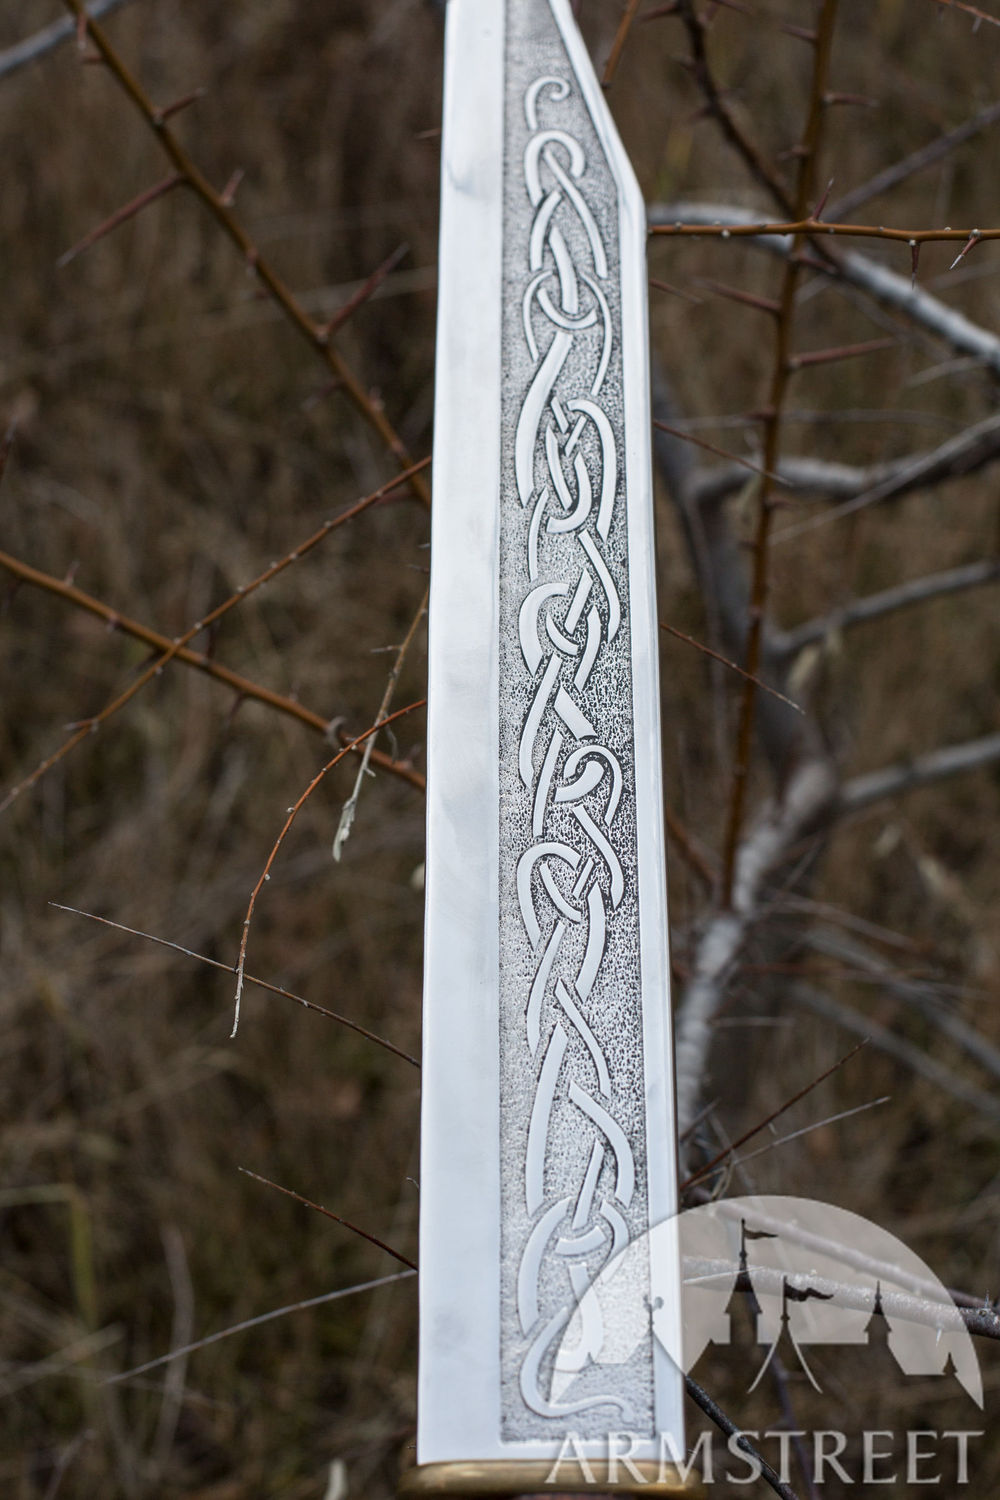 Viking decorative seax with scabbard “Olegg the Mercenary”